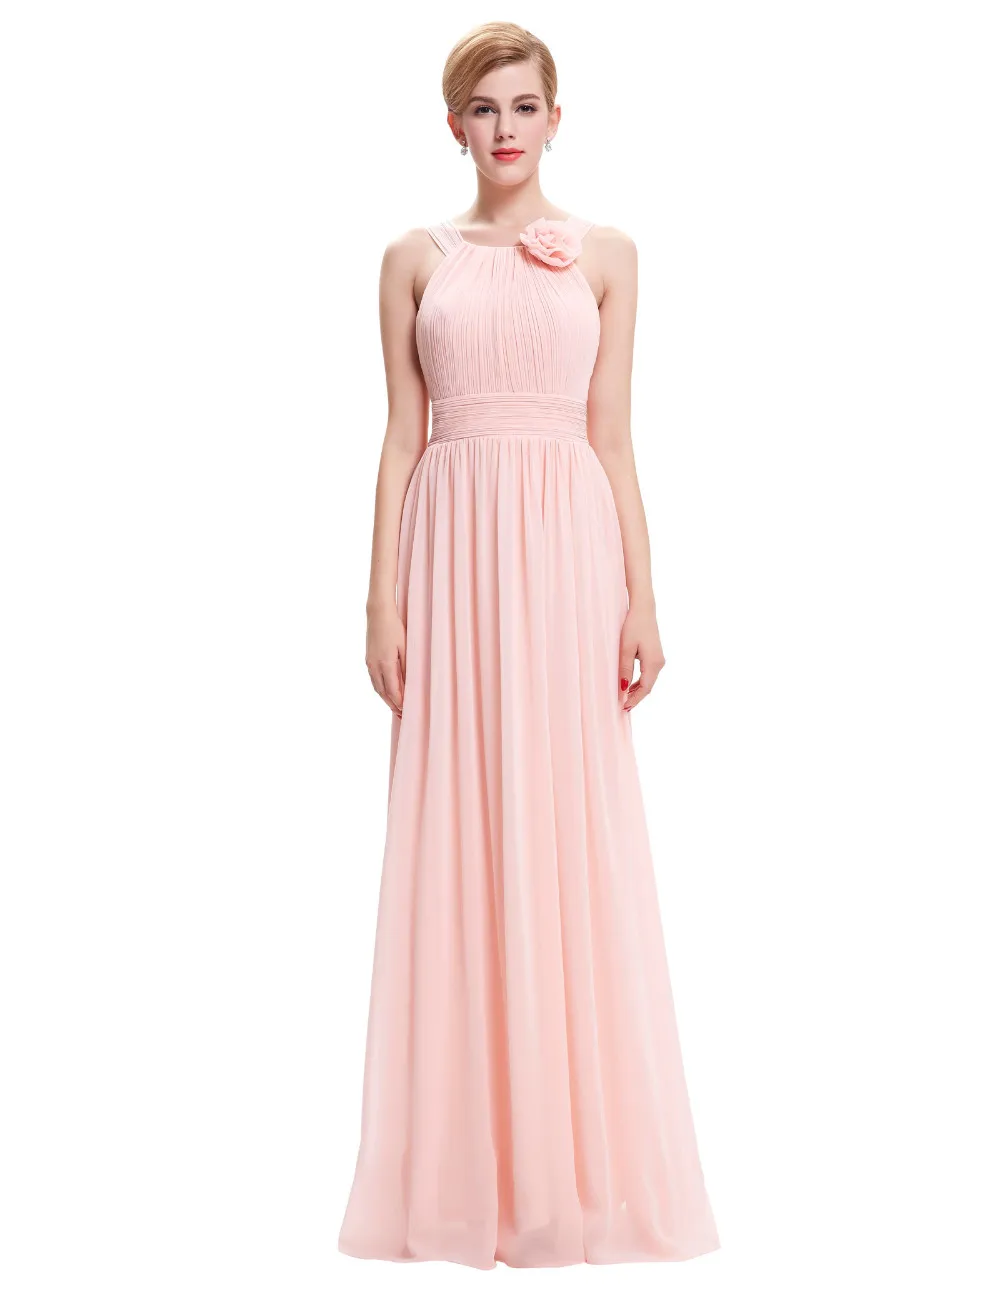 Elegant Pink Long Chiffon Beach Bridesmaid Dress